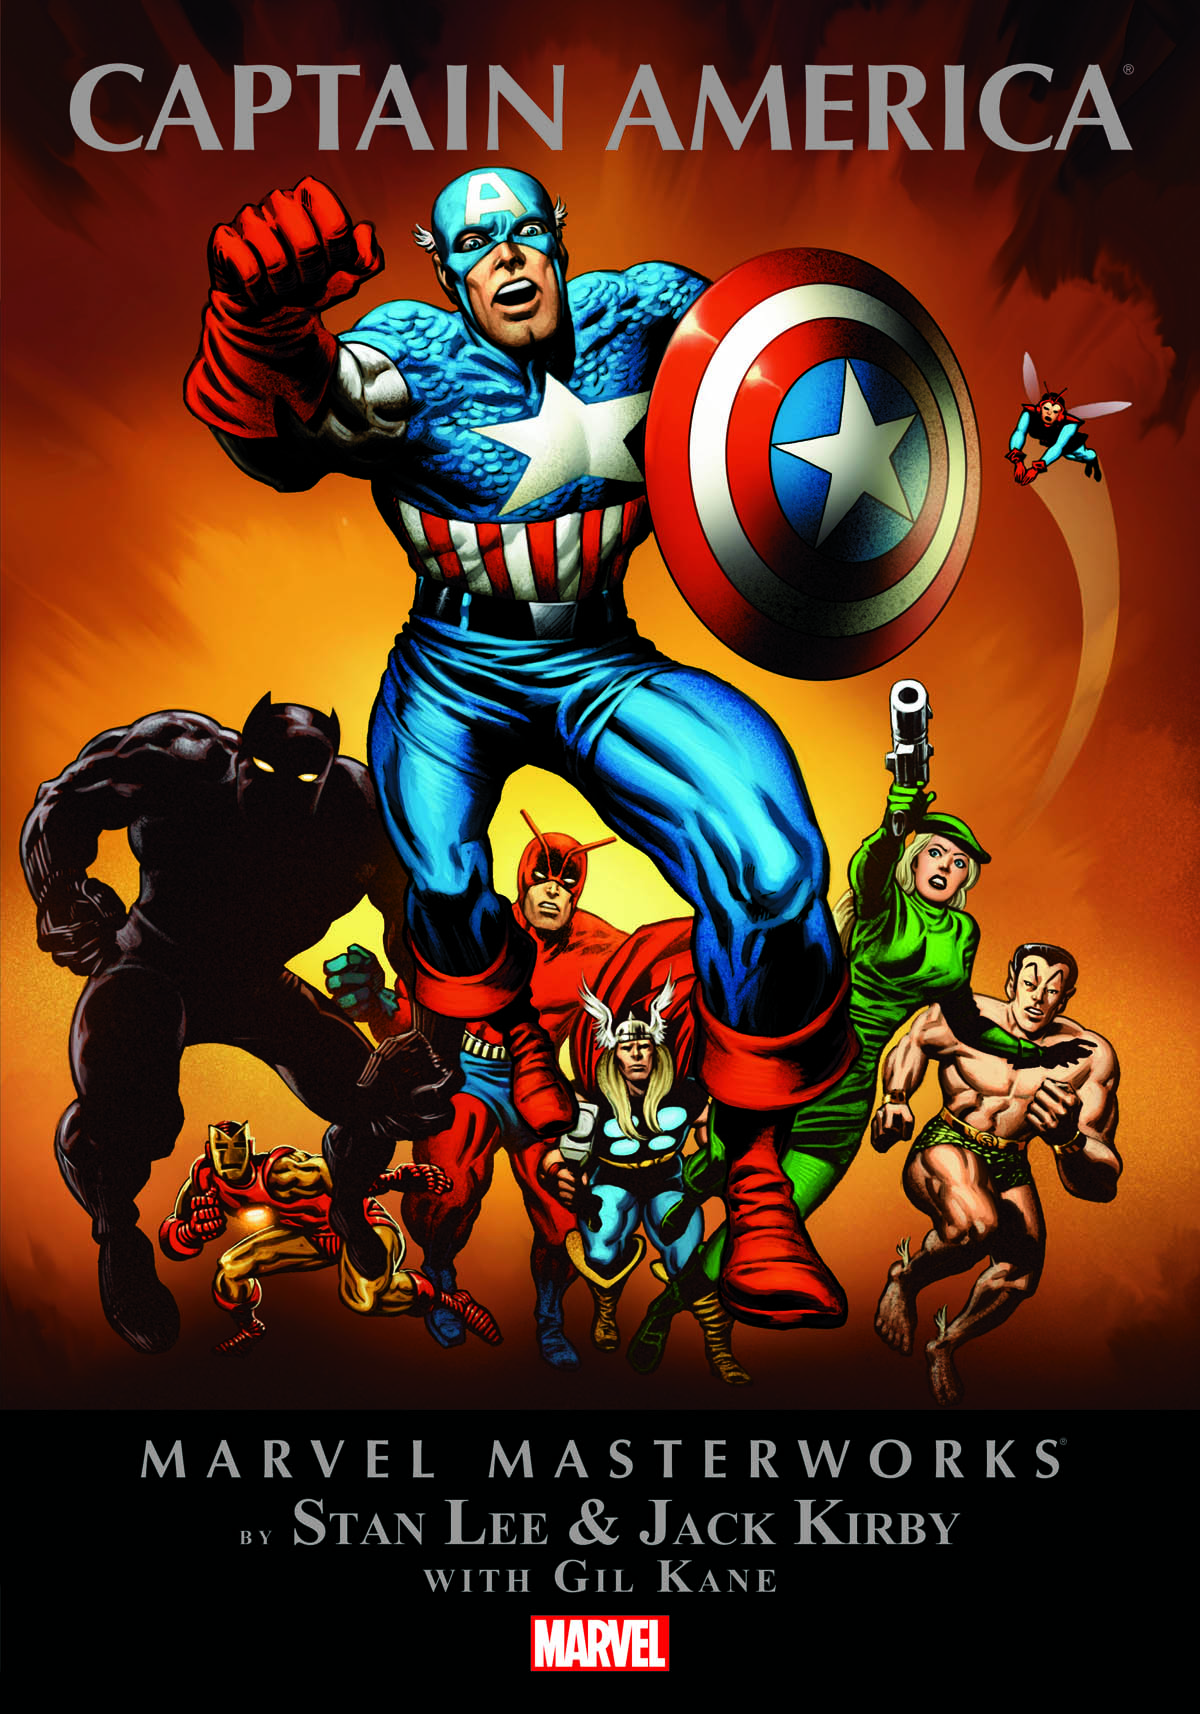 Marvel Masterworks: Captain America Vol. 2 (Trade Paperback)